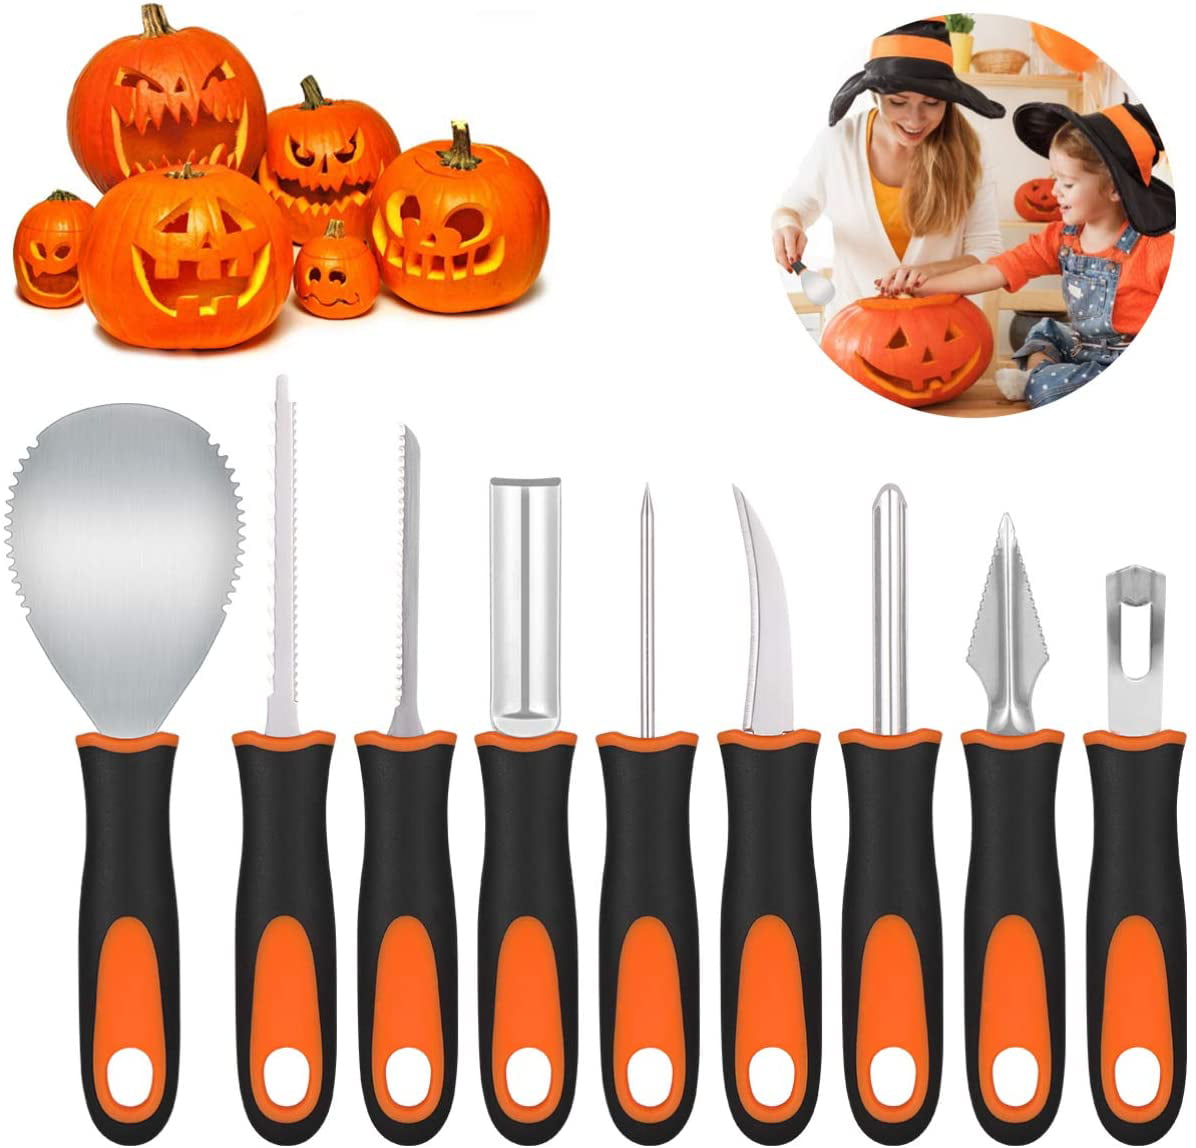 Professional Pumpkin Carving Kit Interchangeable Blades! 